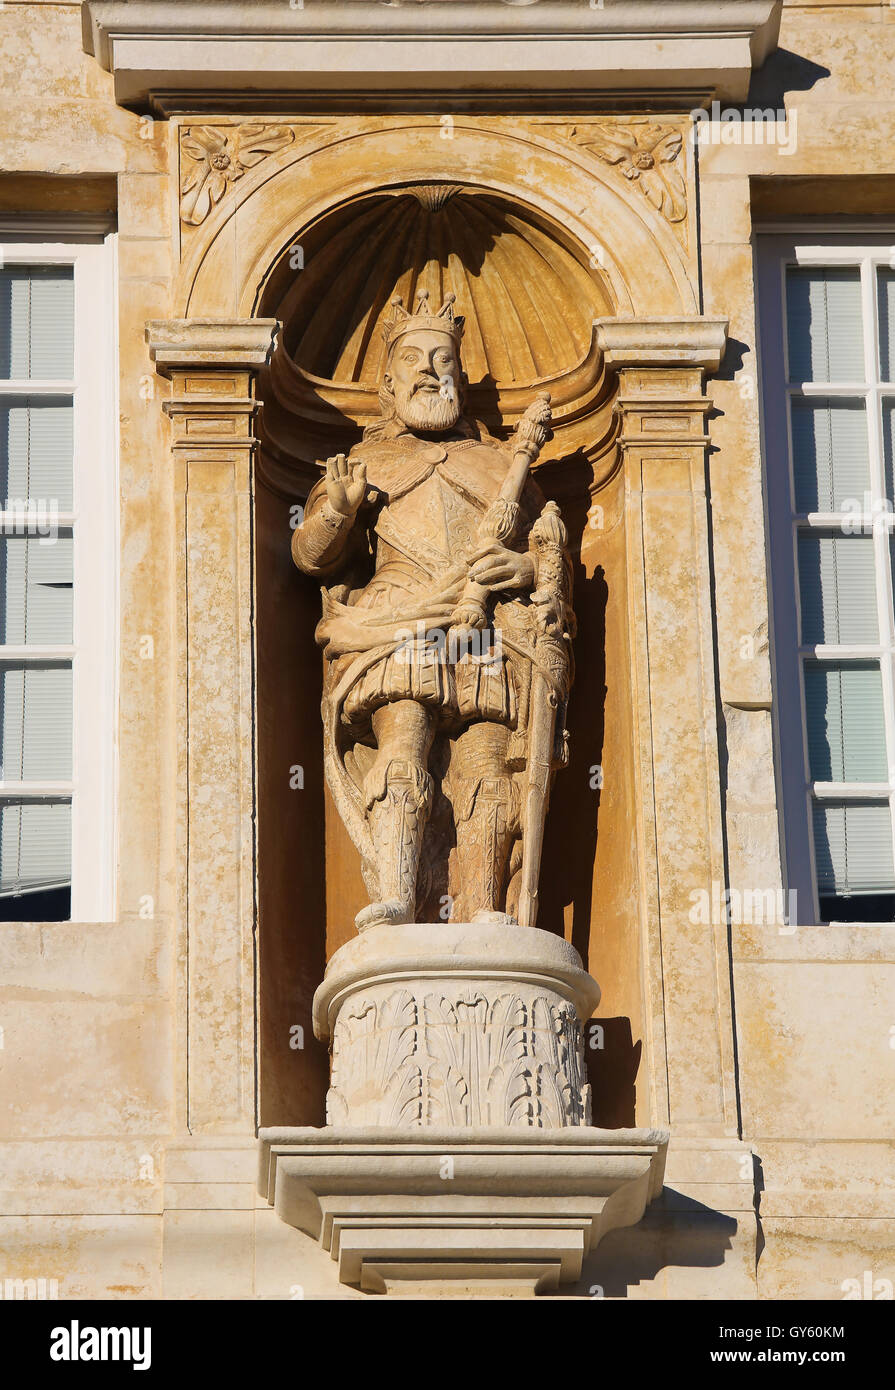 Estatua del rey Juan III en el Palace Gate o puerta de hierro en la Universidad de Coimbra, Portugal Foto de stock